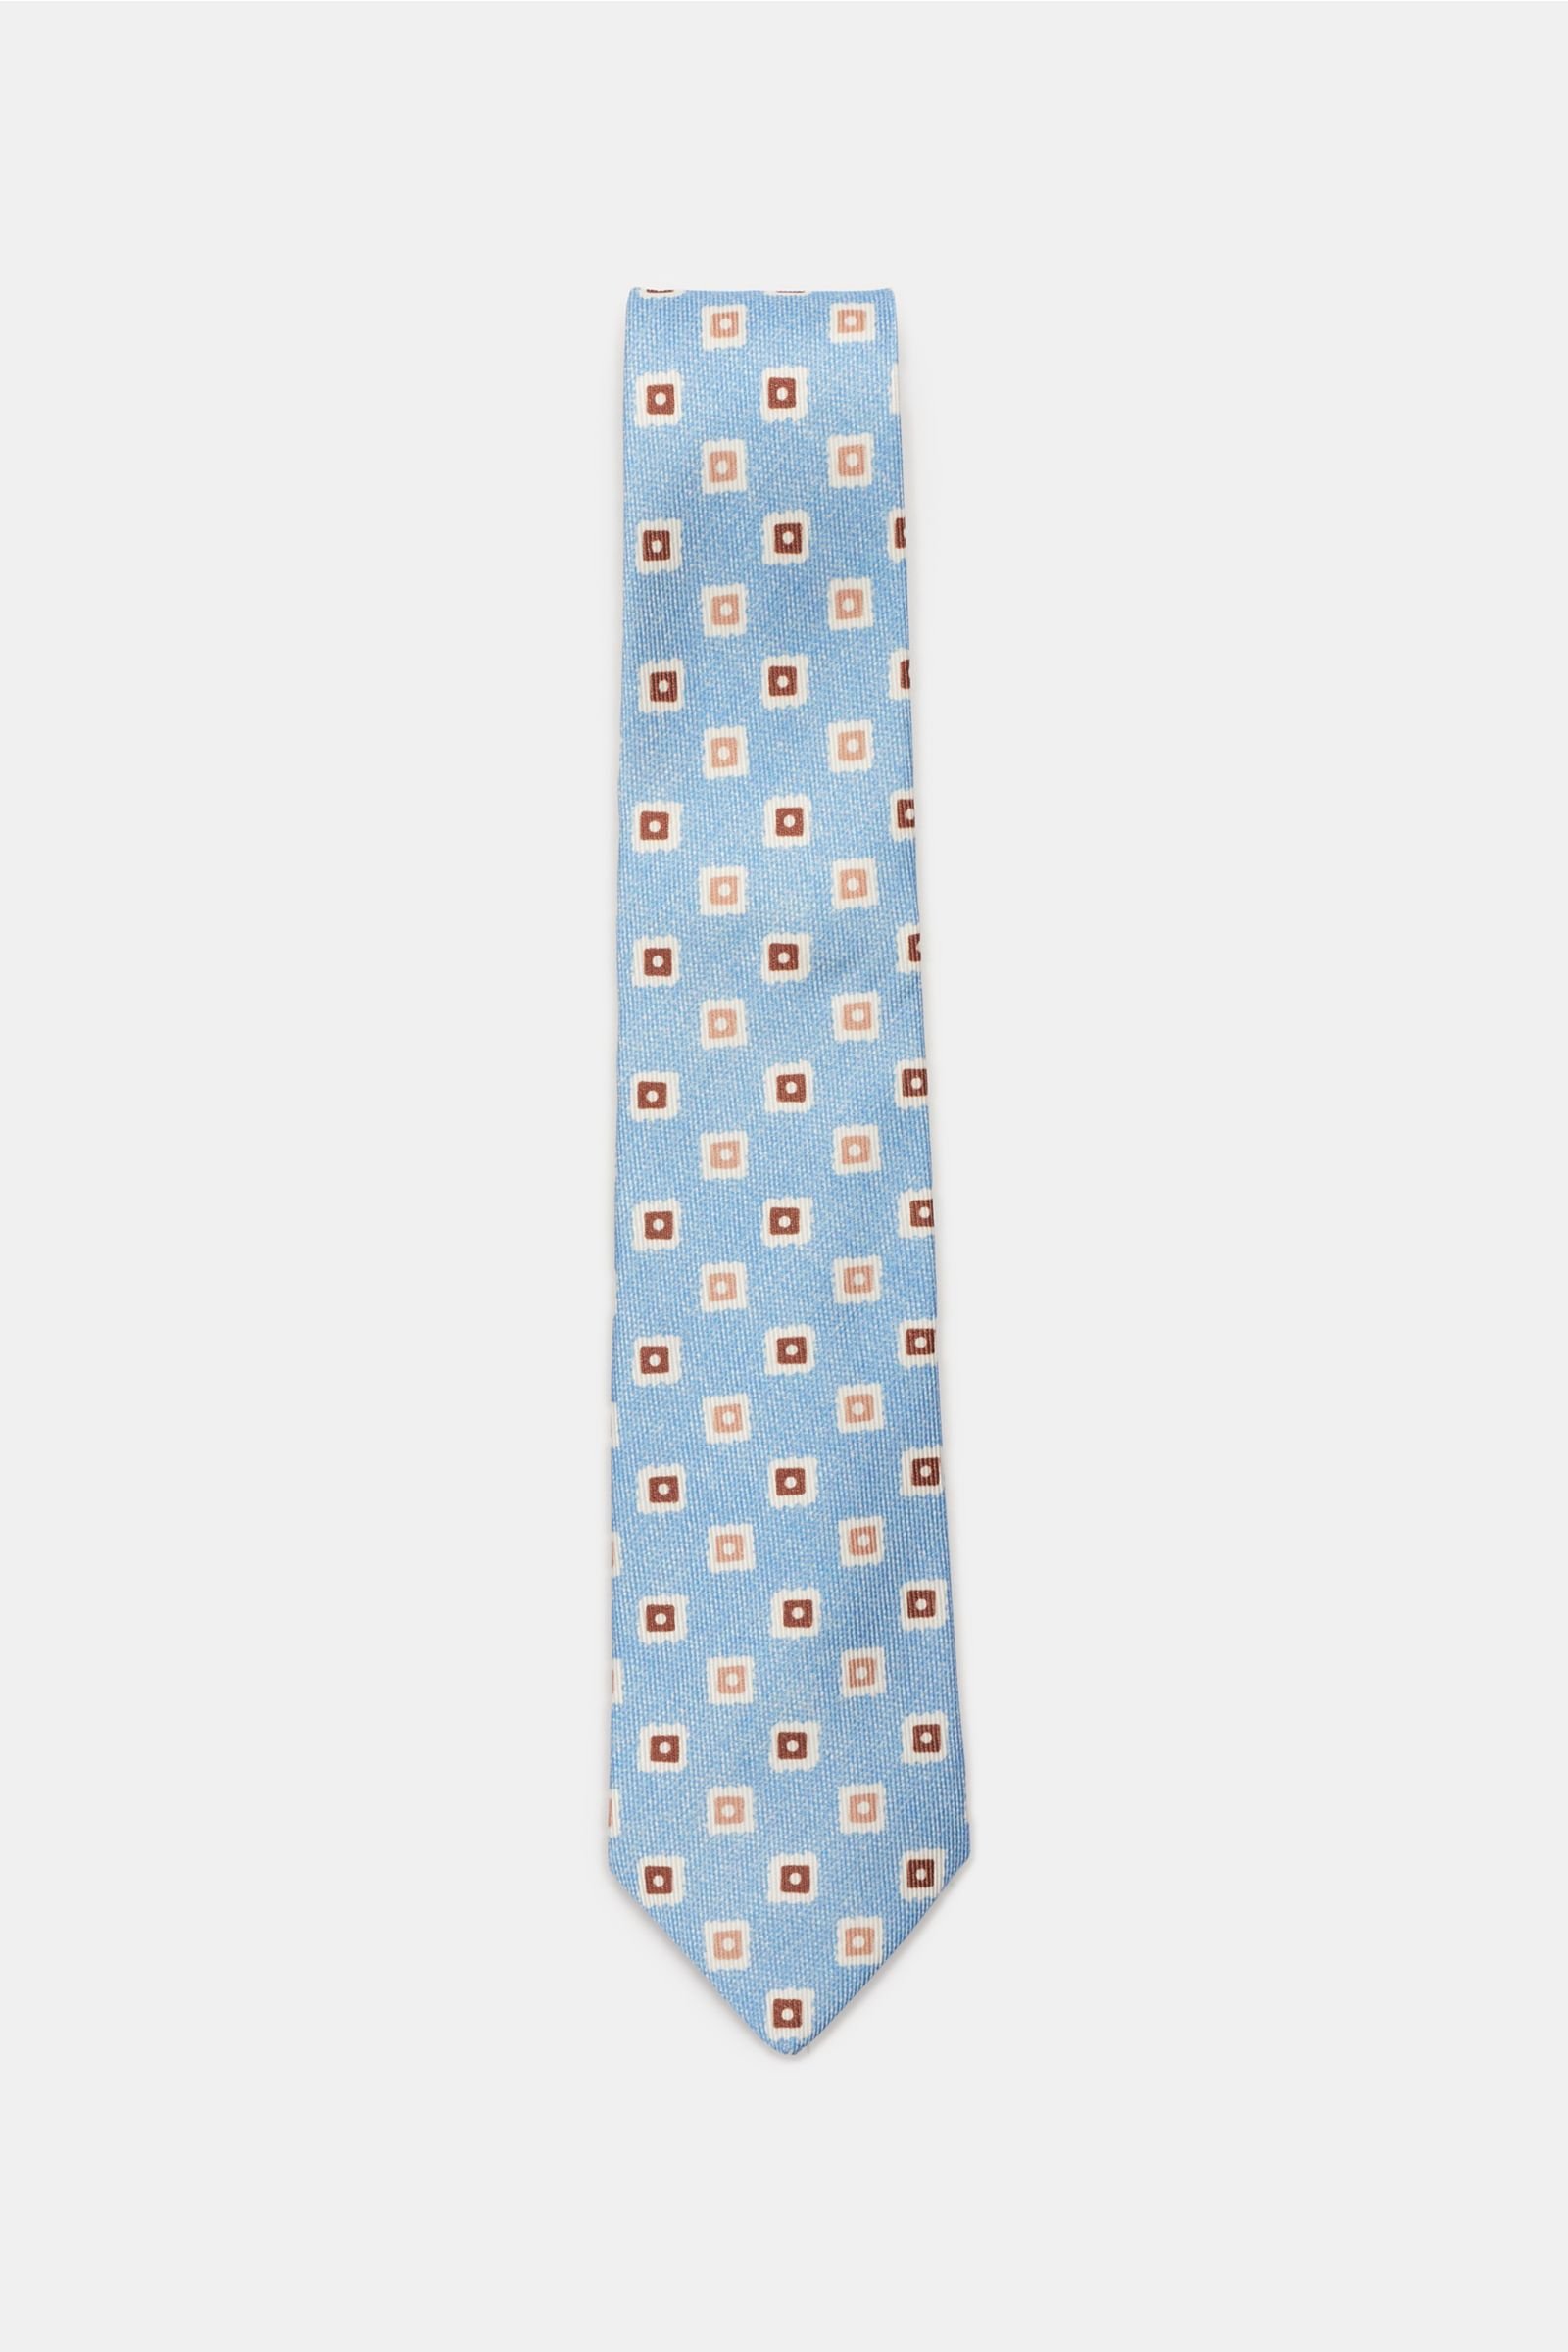 Tie light blue patterned